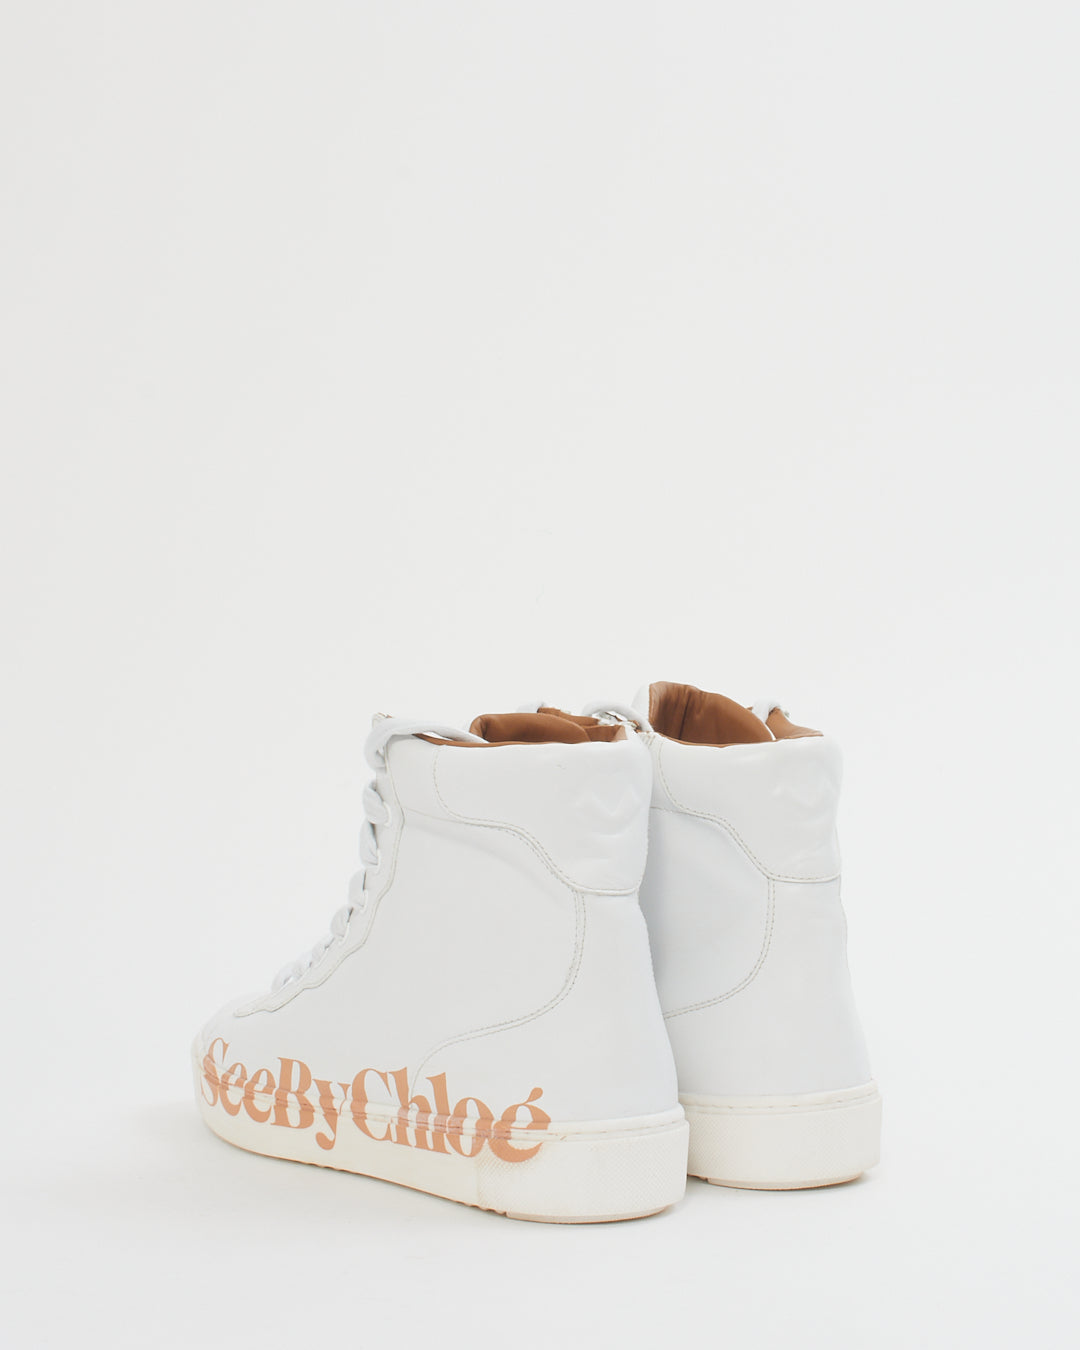 Chloe SeeByChloe White Logo High Top Sneakers - 38